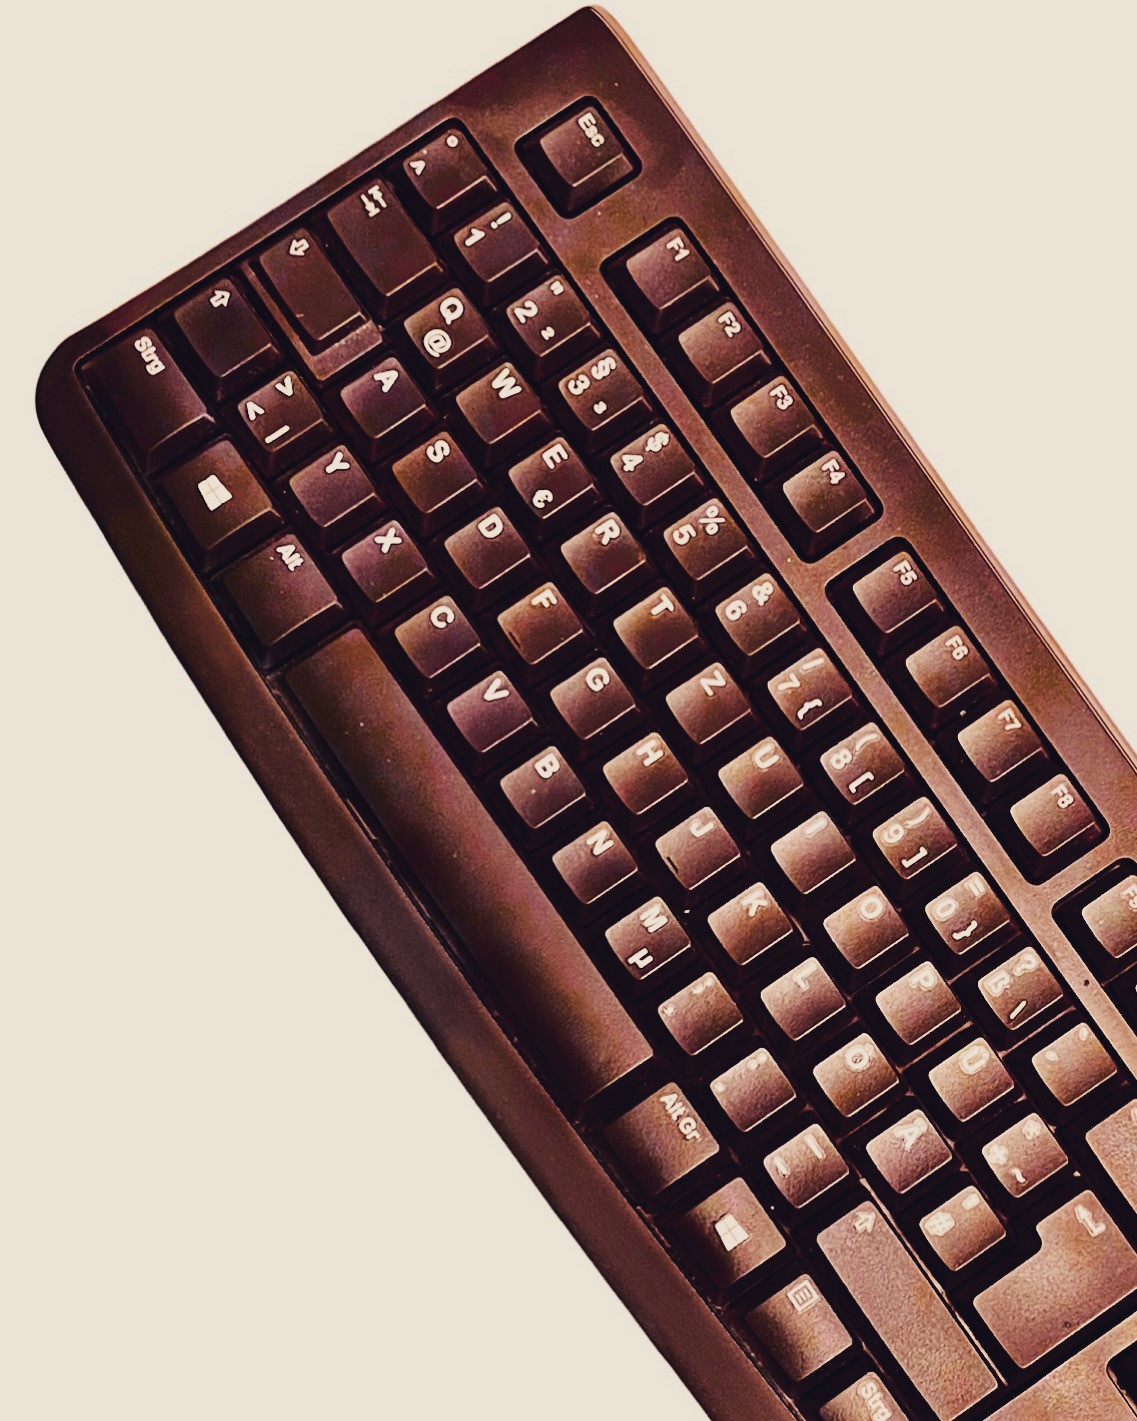 Tastatur Schokolade